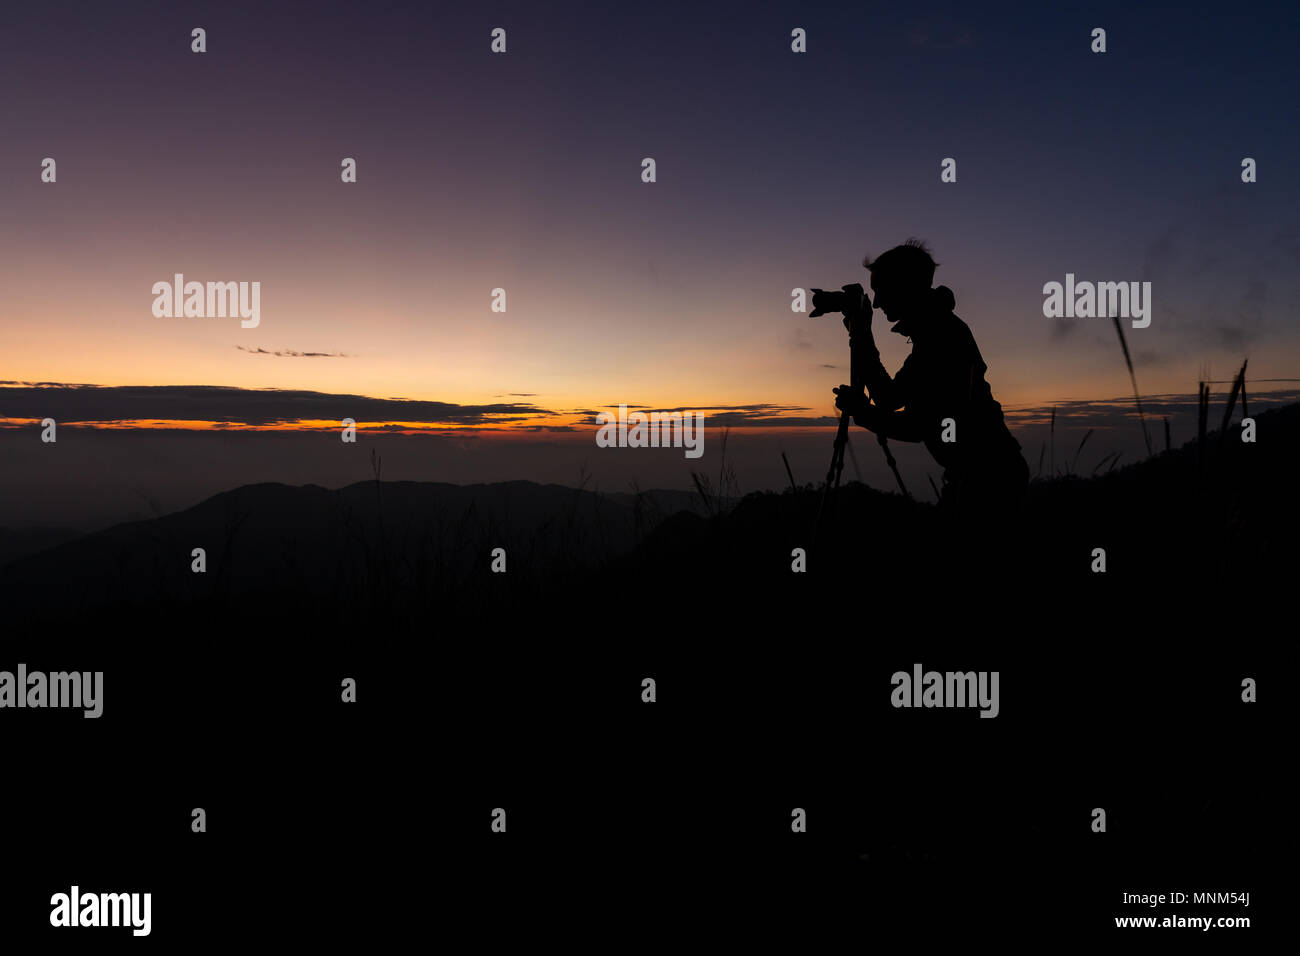 Fotograf shooting Sonnenuntergang von Doi Lanka Noi (1756 m) in Khun Chae Nationalpark (อุทยานแห่งชาติขุนแจ) im Norden von Thailand Stockfoto